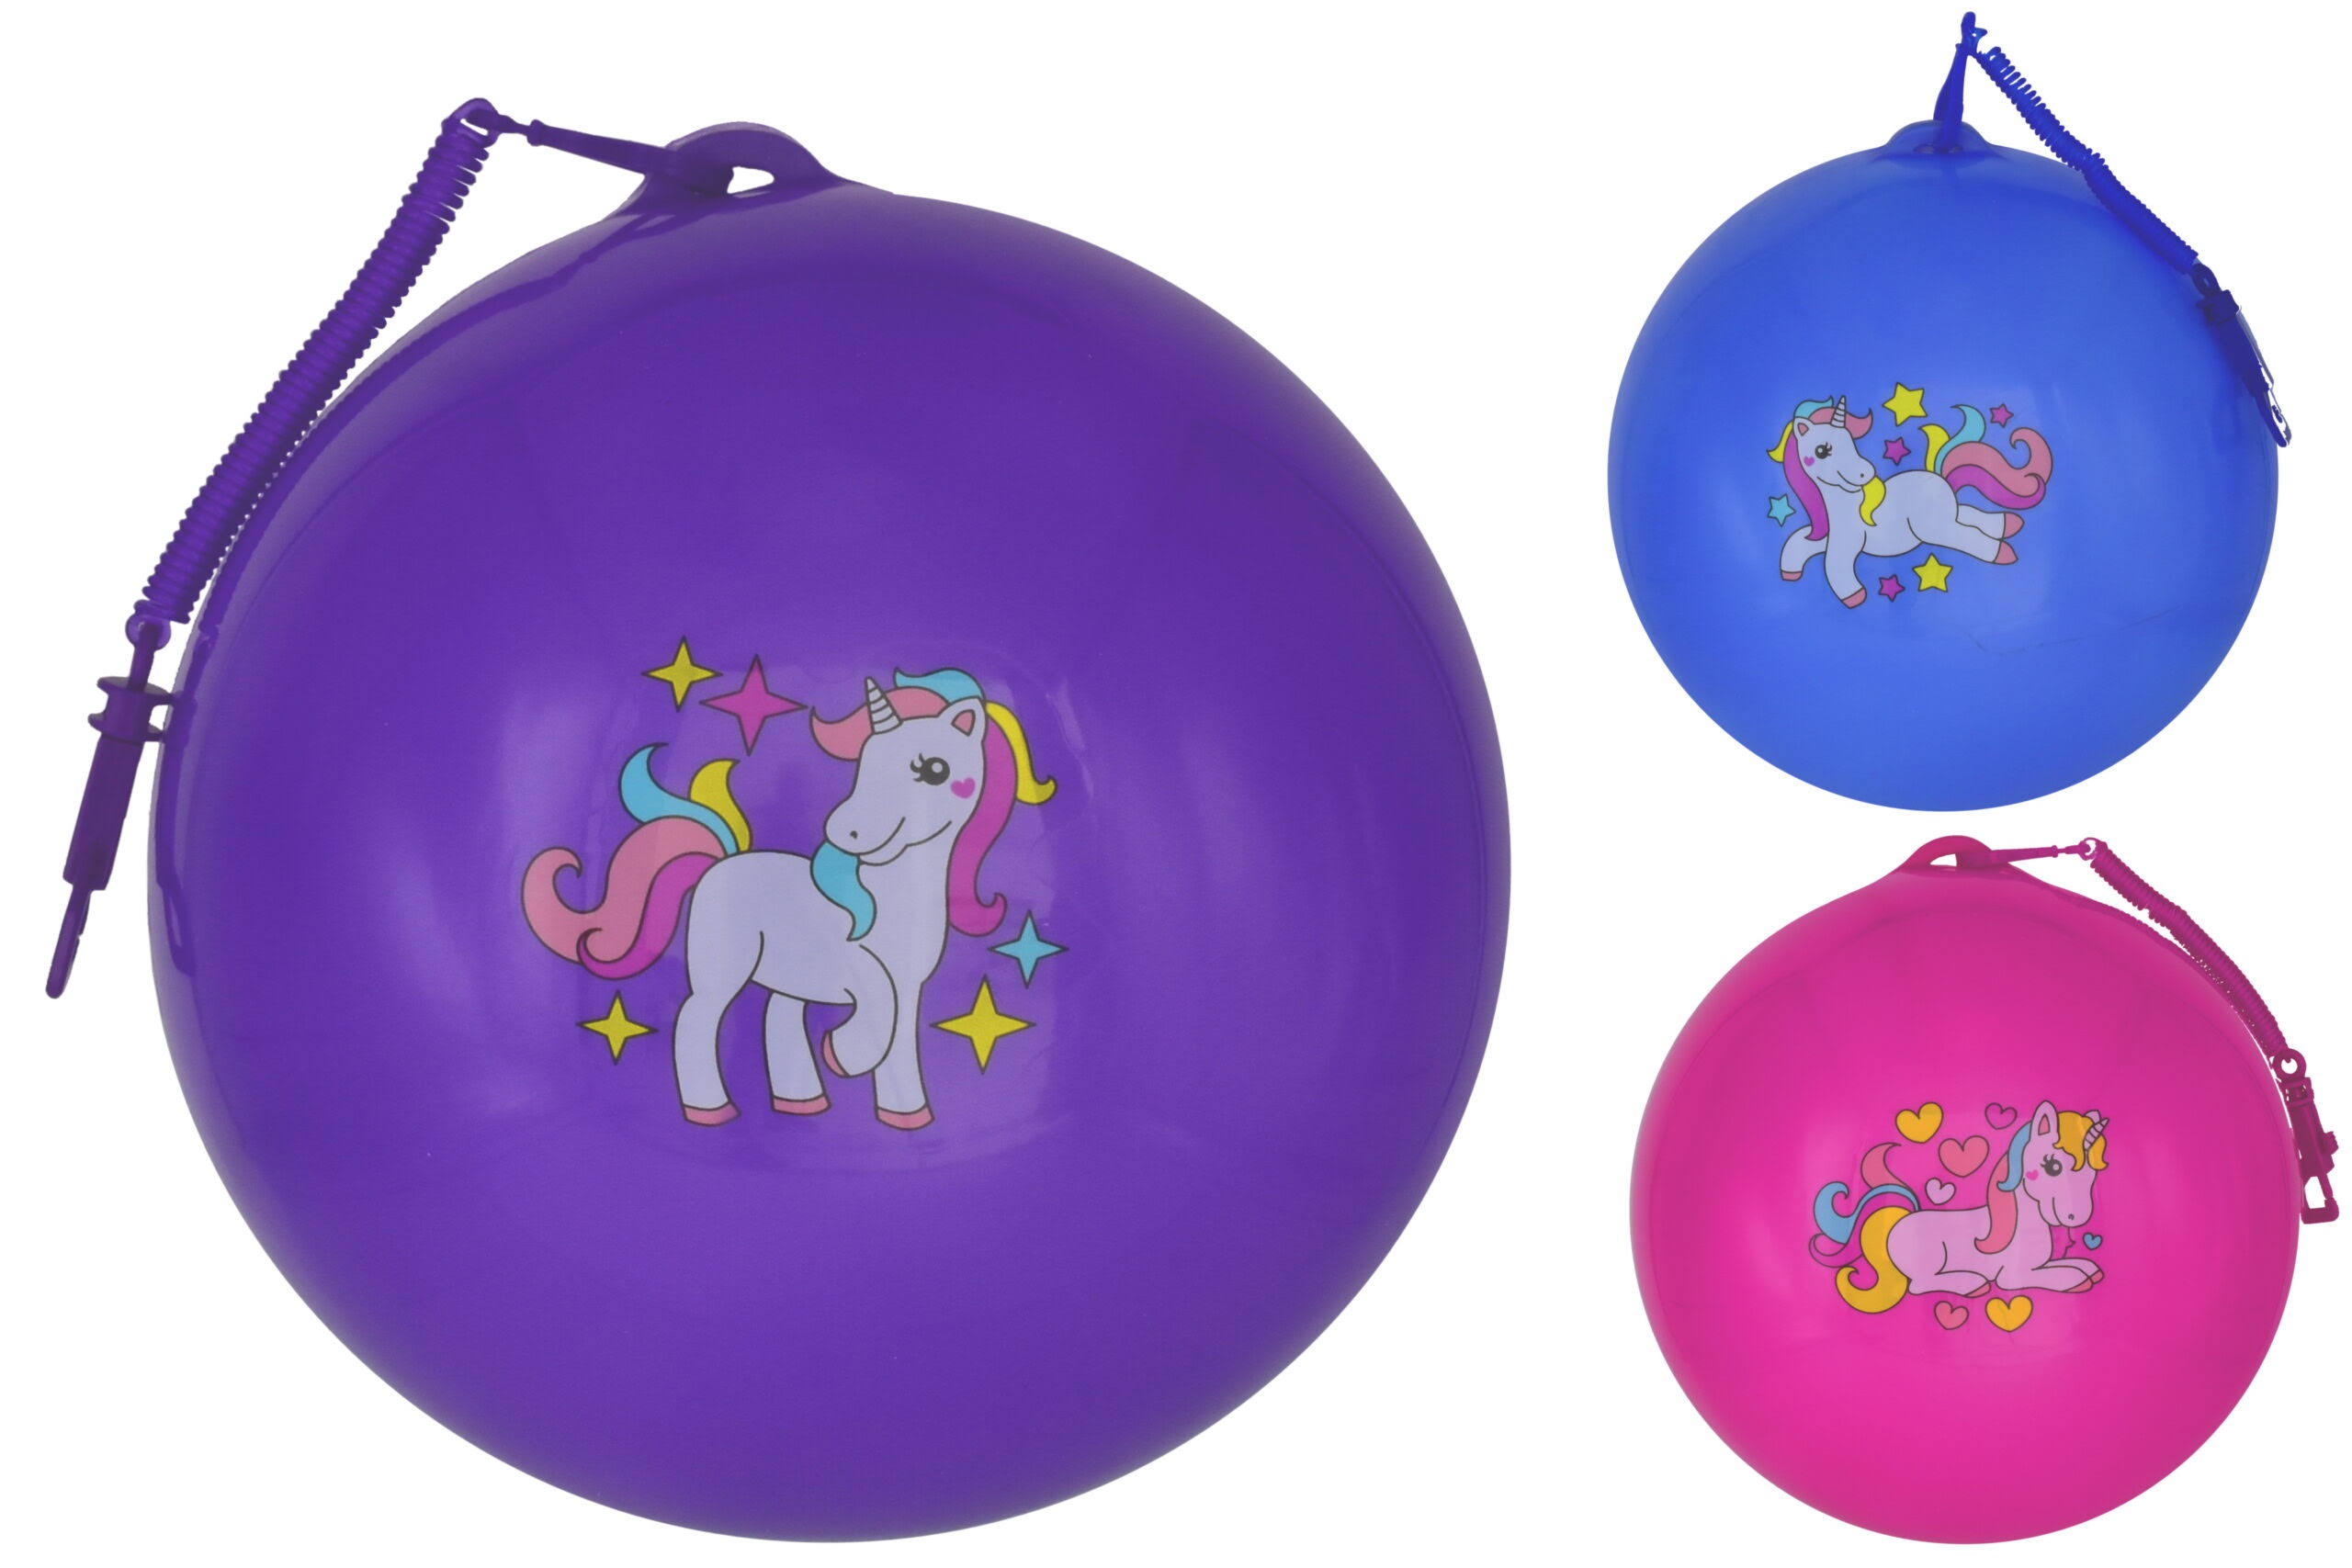 Kandy Toys TY3658 Ball Unicorn - With Keyring